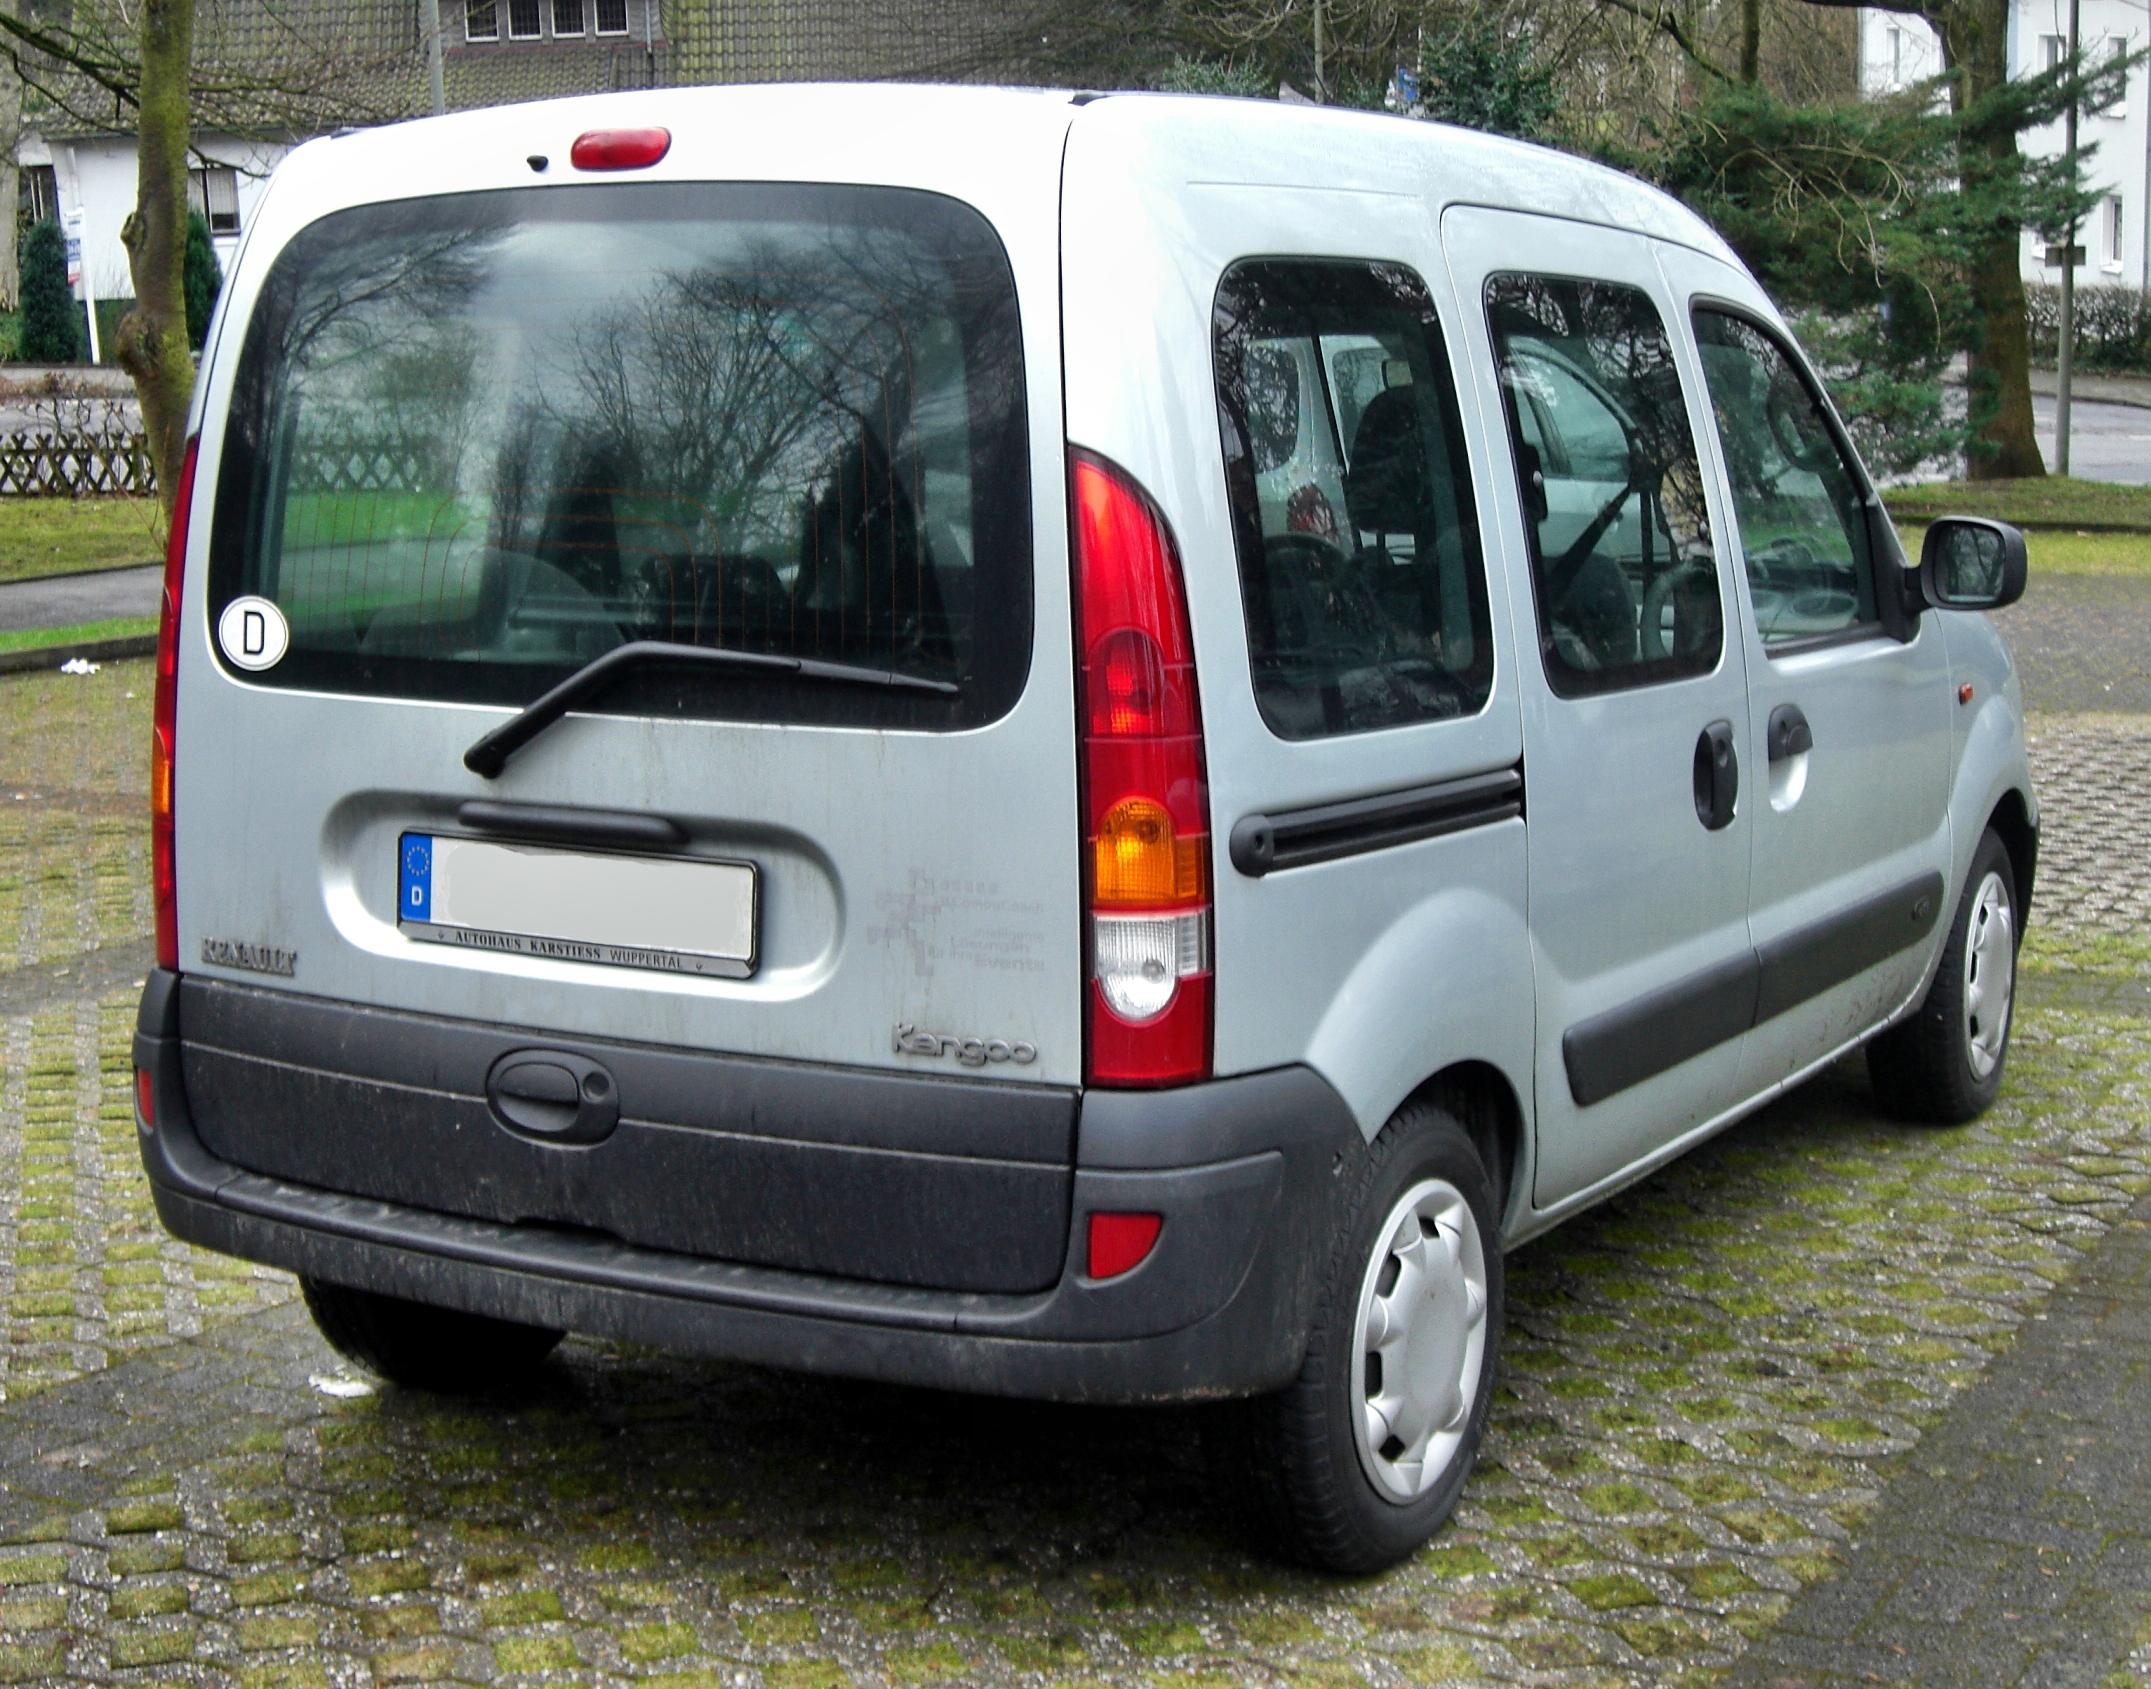 File:Renault Kangoo II facelift van (Sweden), front right.jpg - Wikipedia